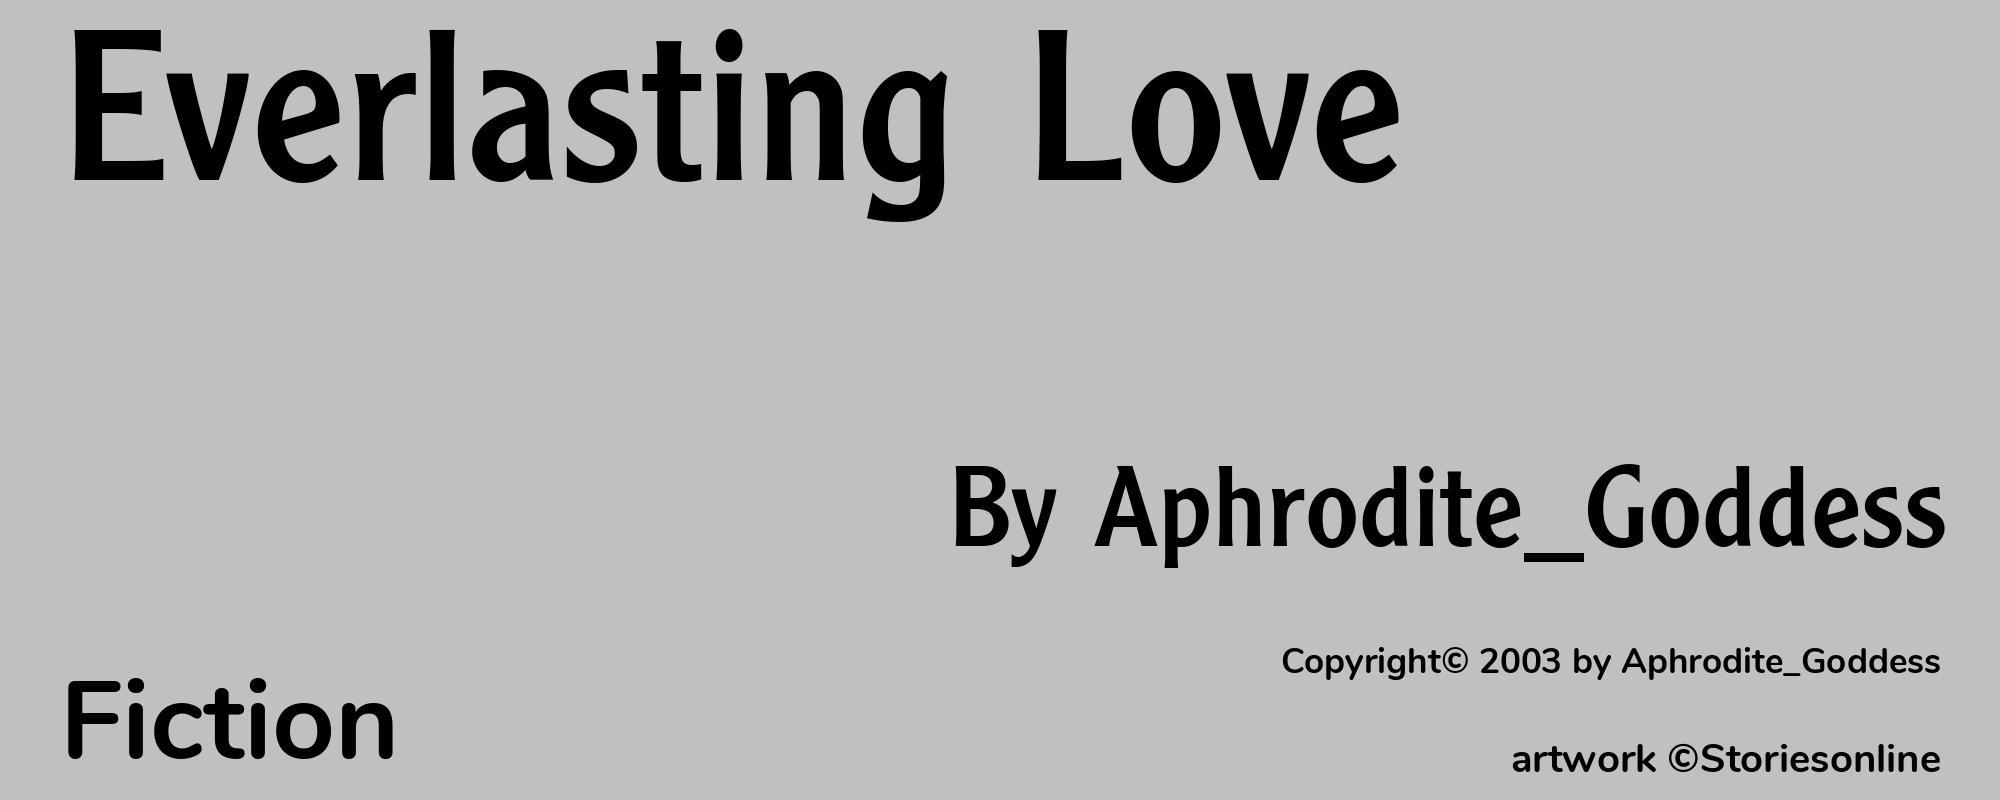 Everlasting Love - Cover